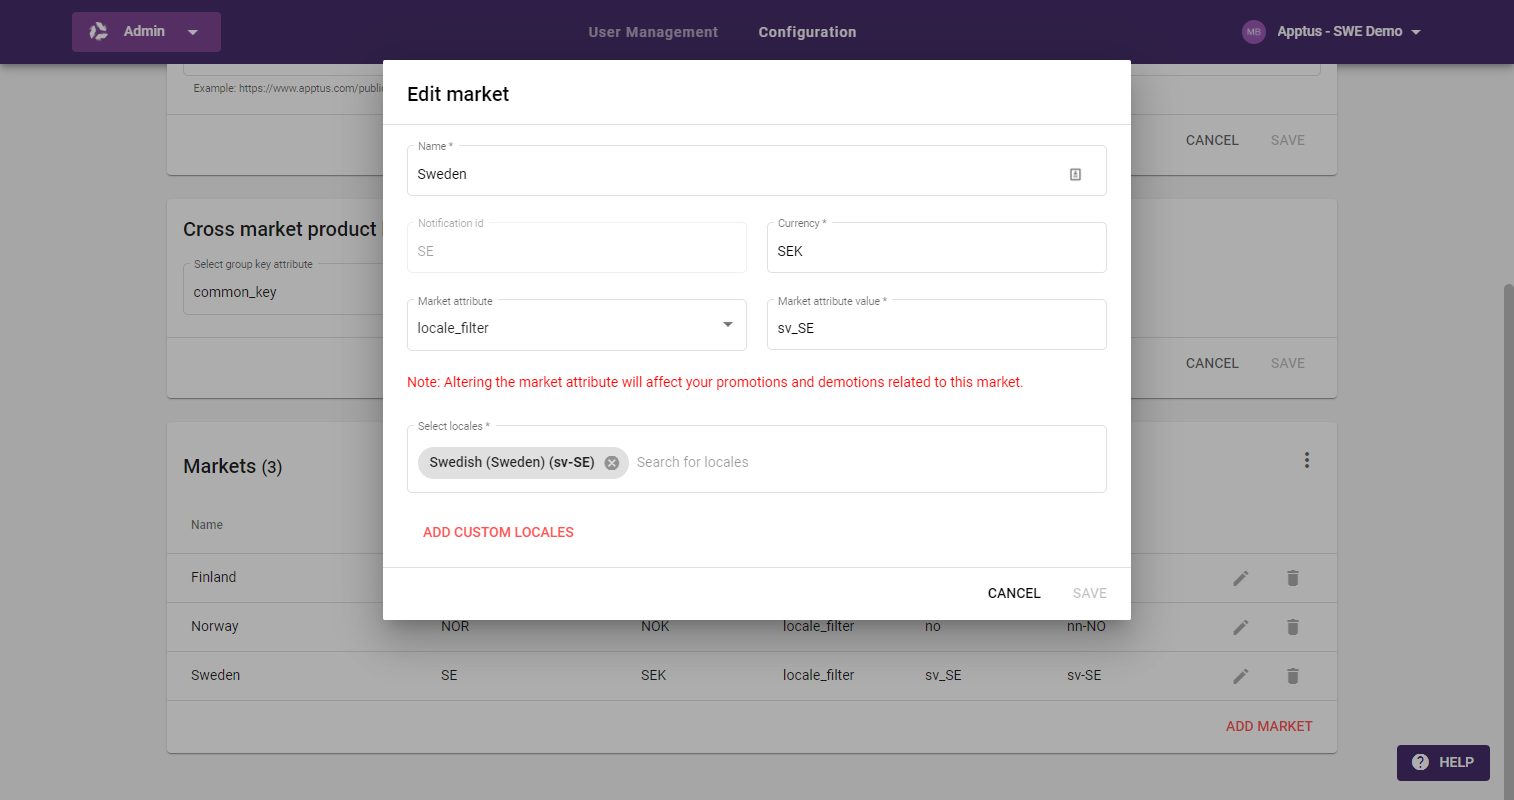 Screenshot of Apptus eSales Admin app with Market configuration